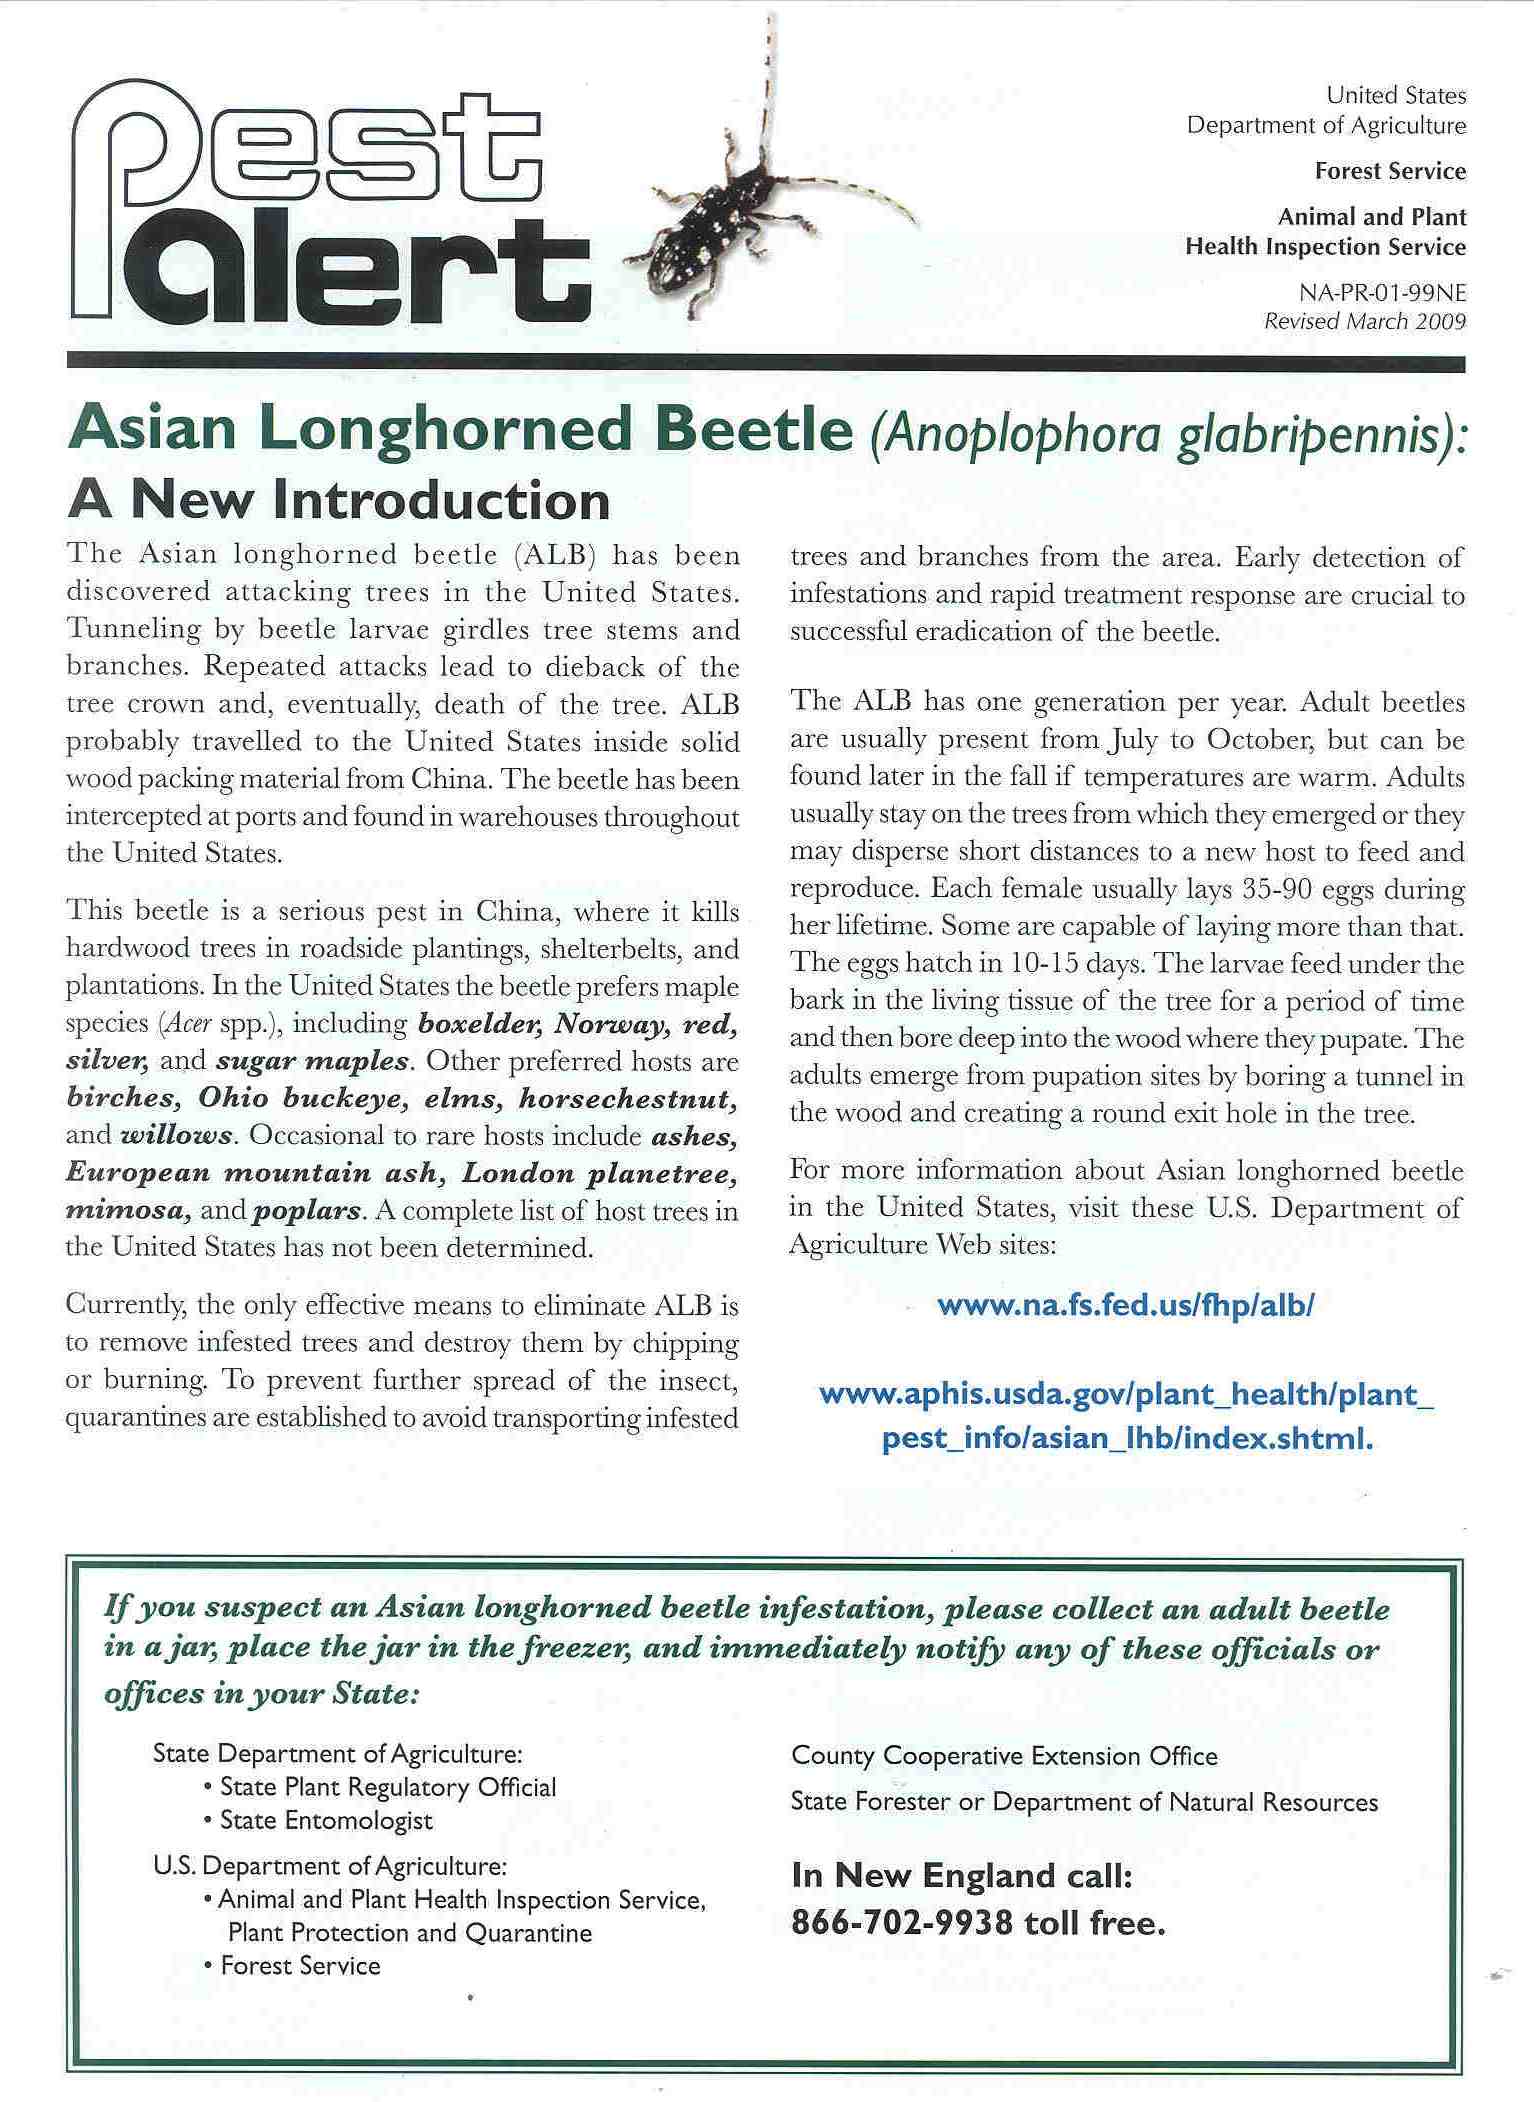 Pest Alert: Asian Longhorned Beetle (8-1/2" x 11") 